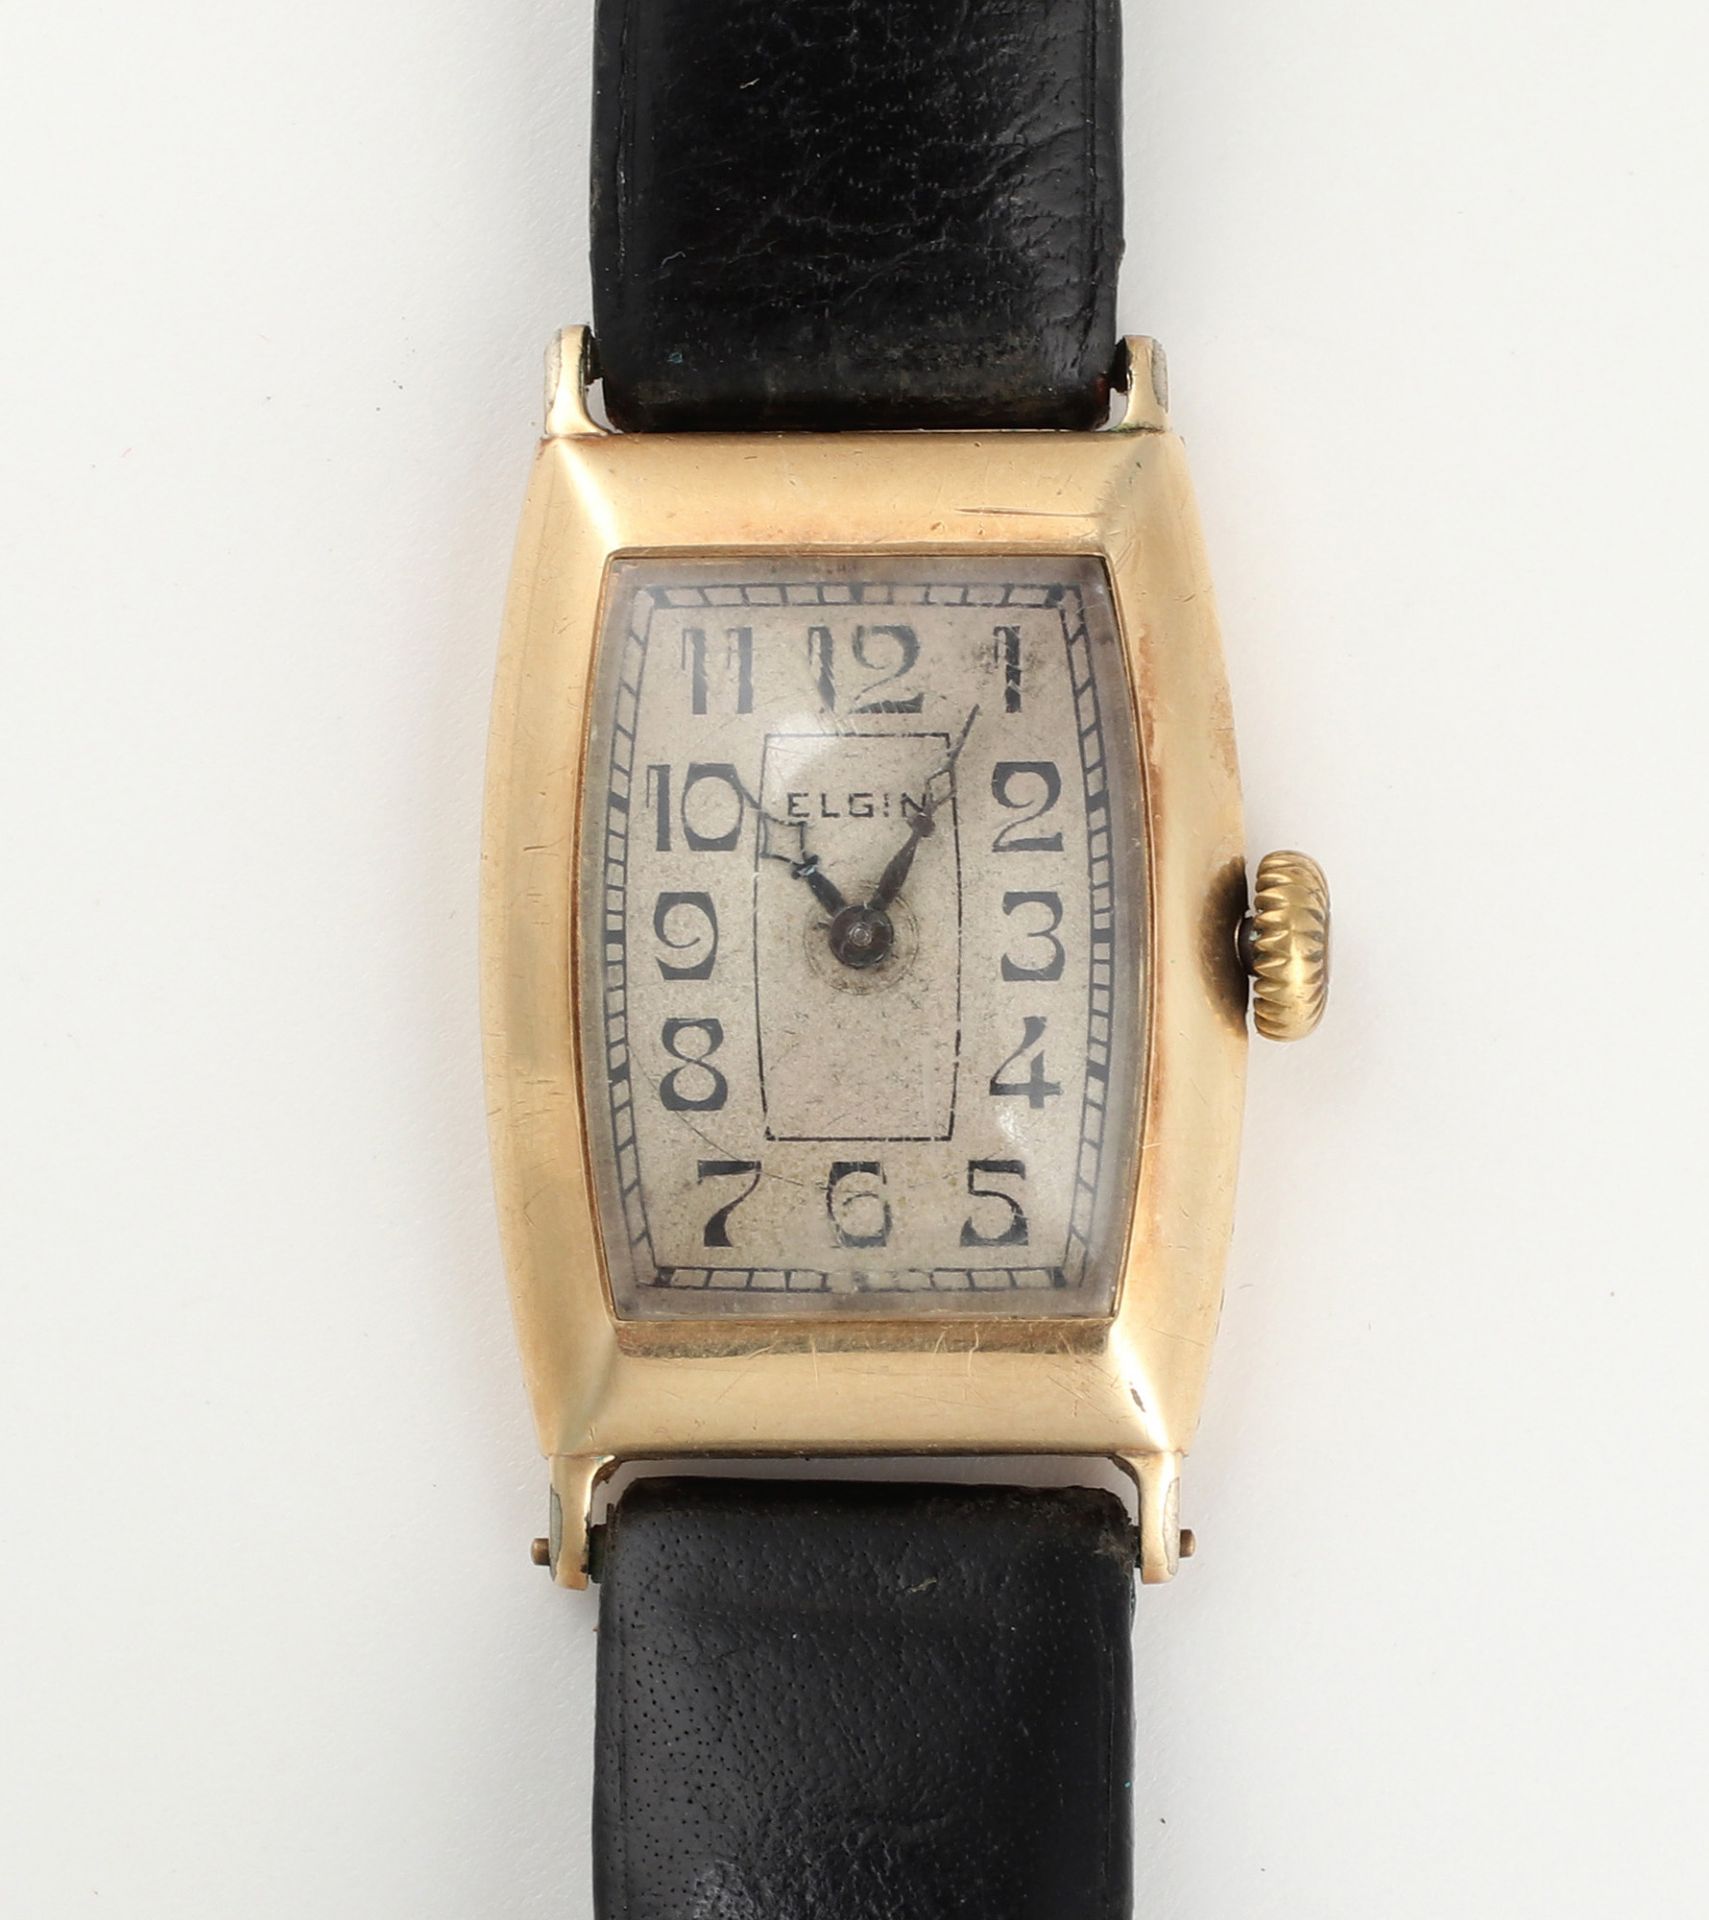 Armbanduhr, um 1920-30